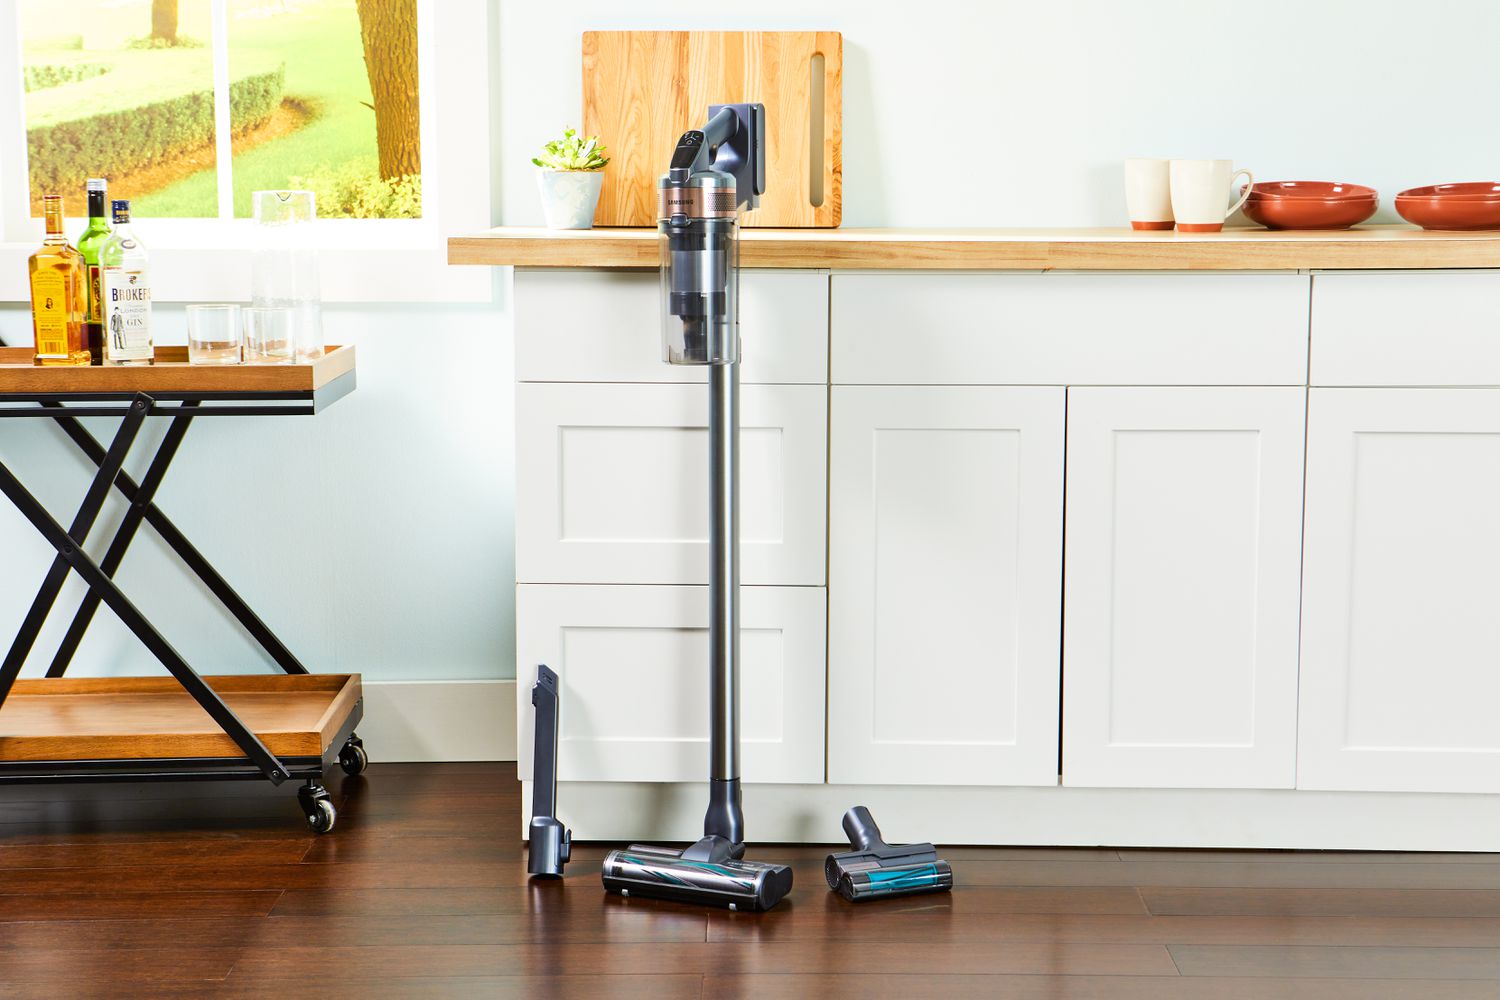 Samsung Jet 75 Cordless Stick Vacuum displayed next to a kitchen counter